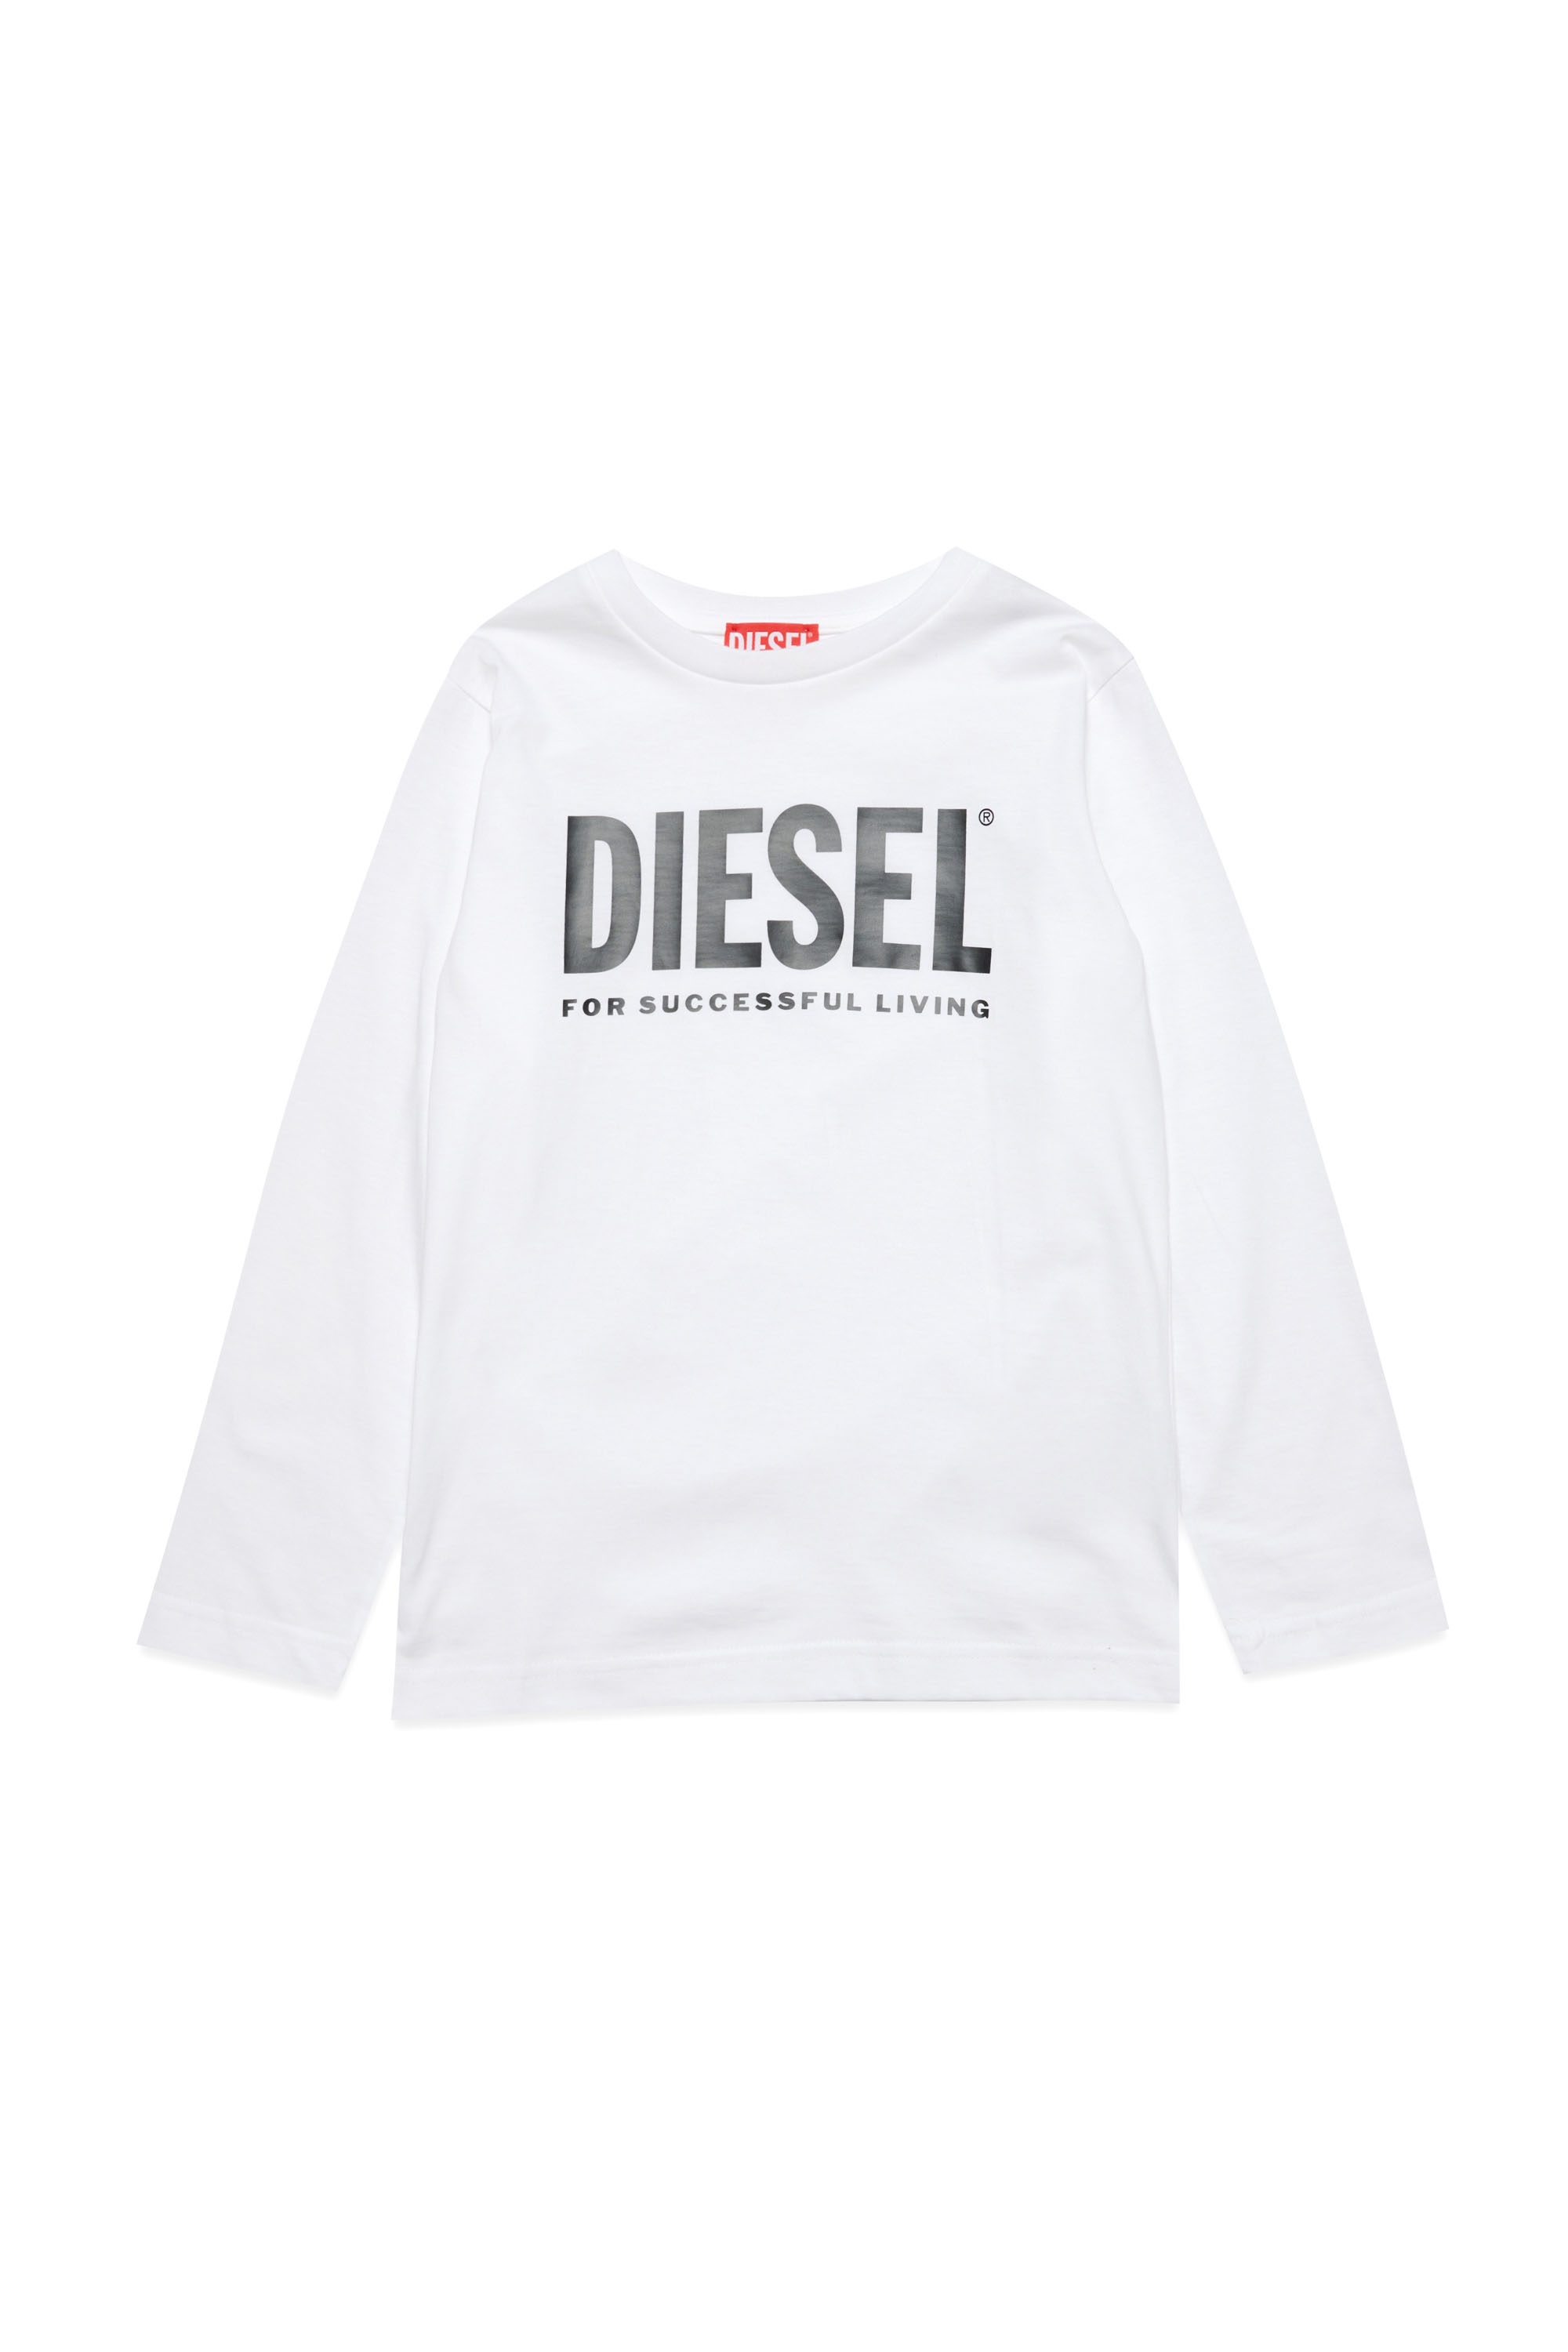 Diesel - LTGIM DI ML, Weiß - Image 1